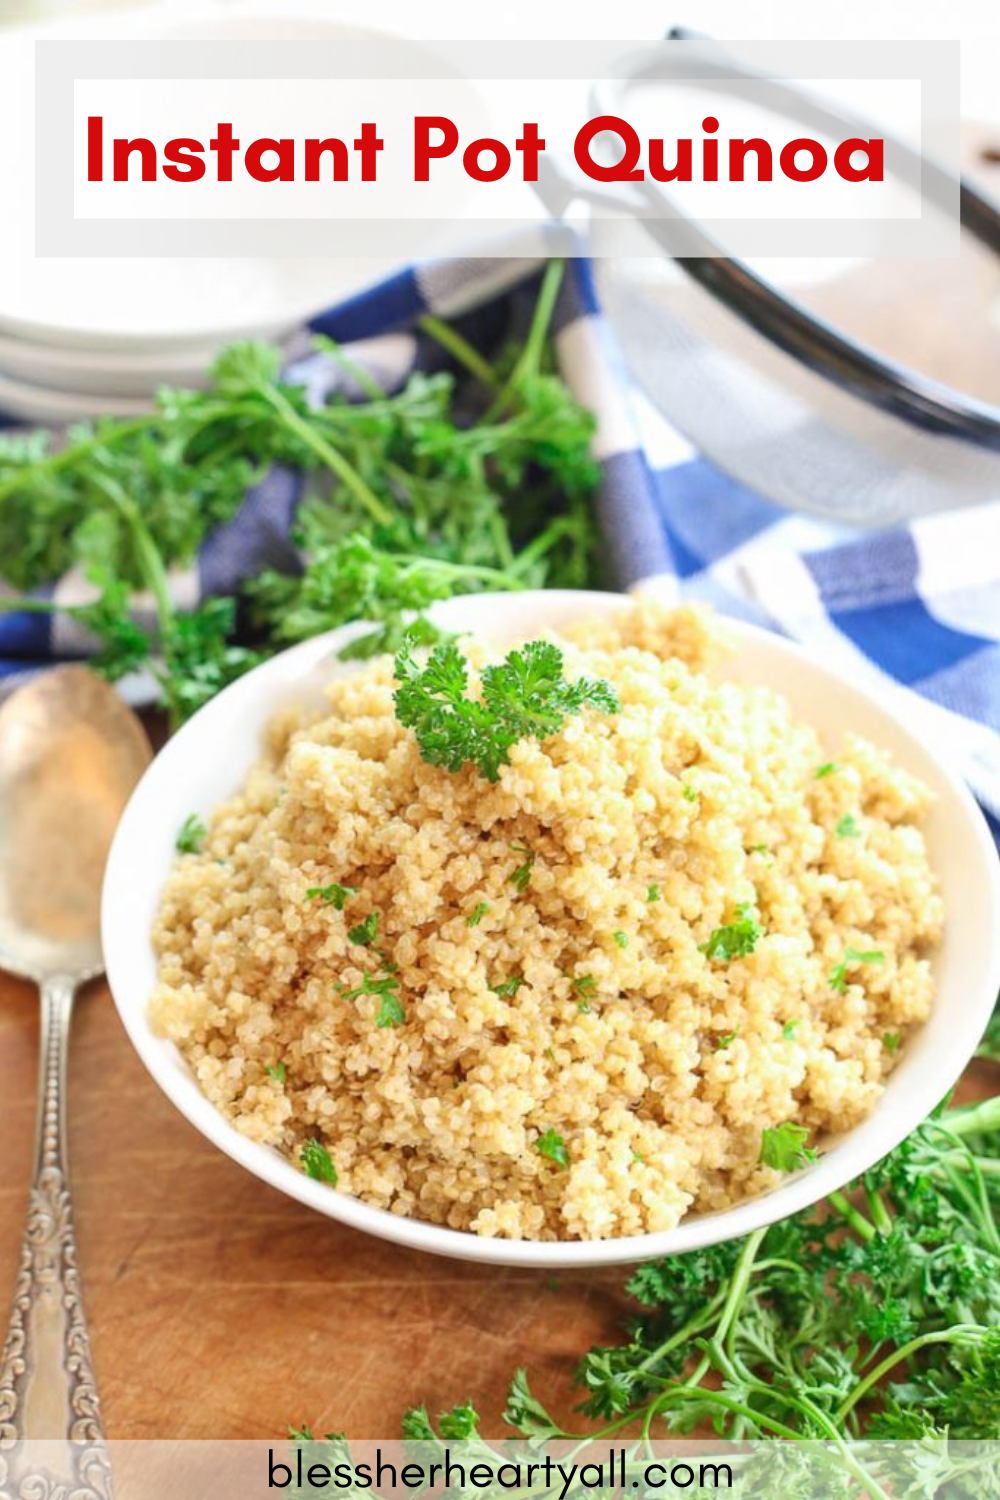 Easiest Instant Pot Quinoa (Pressure Cooker): Delicious & Gluten-Free!